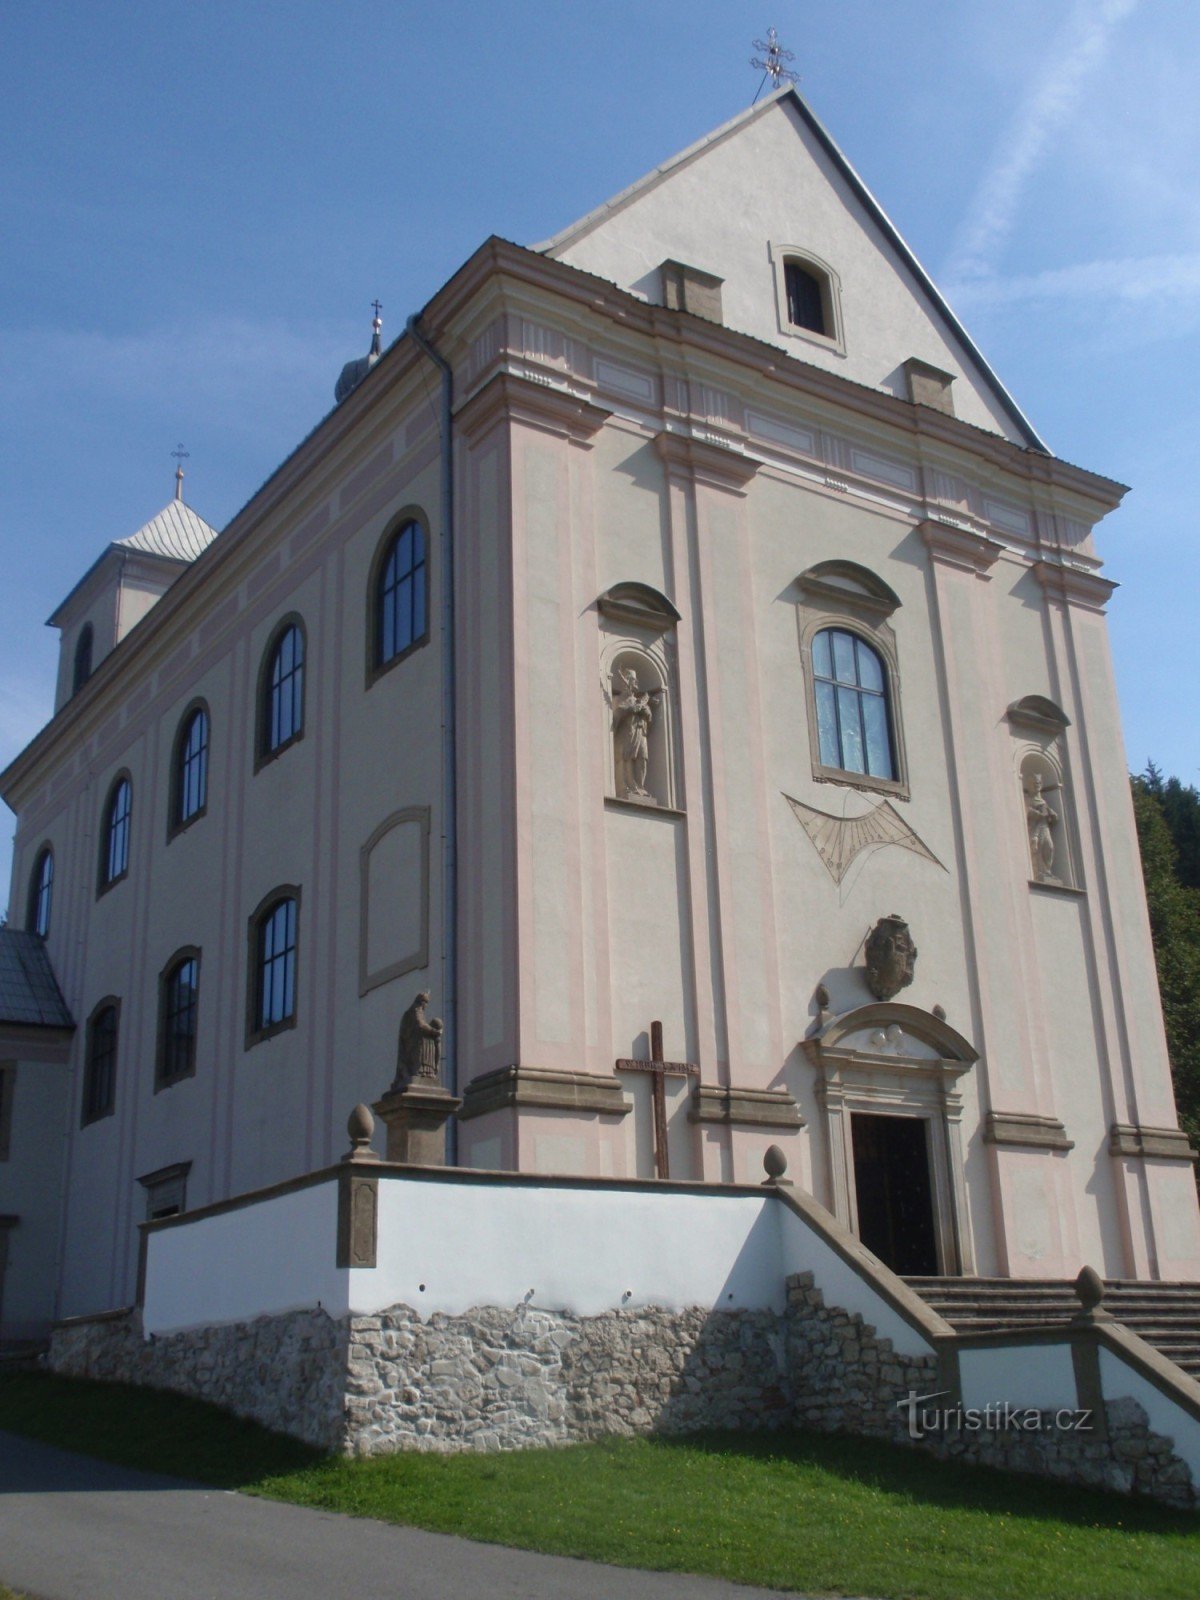 Wallfahrtskirche Mariä Geburt und St. Anna in Rajnochovice